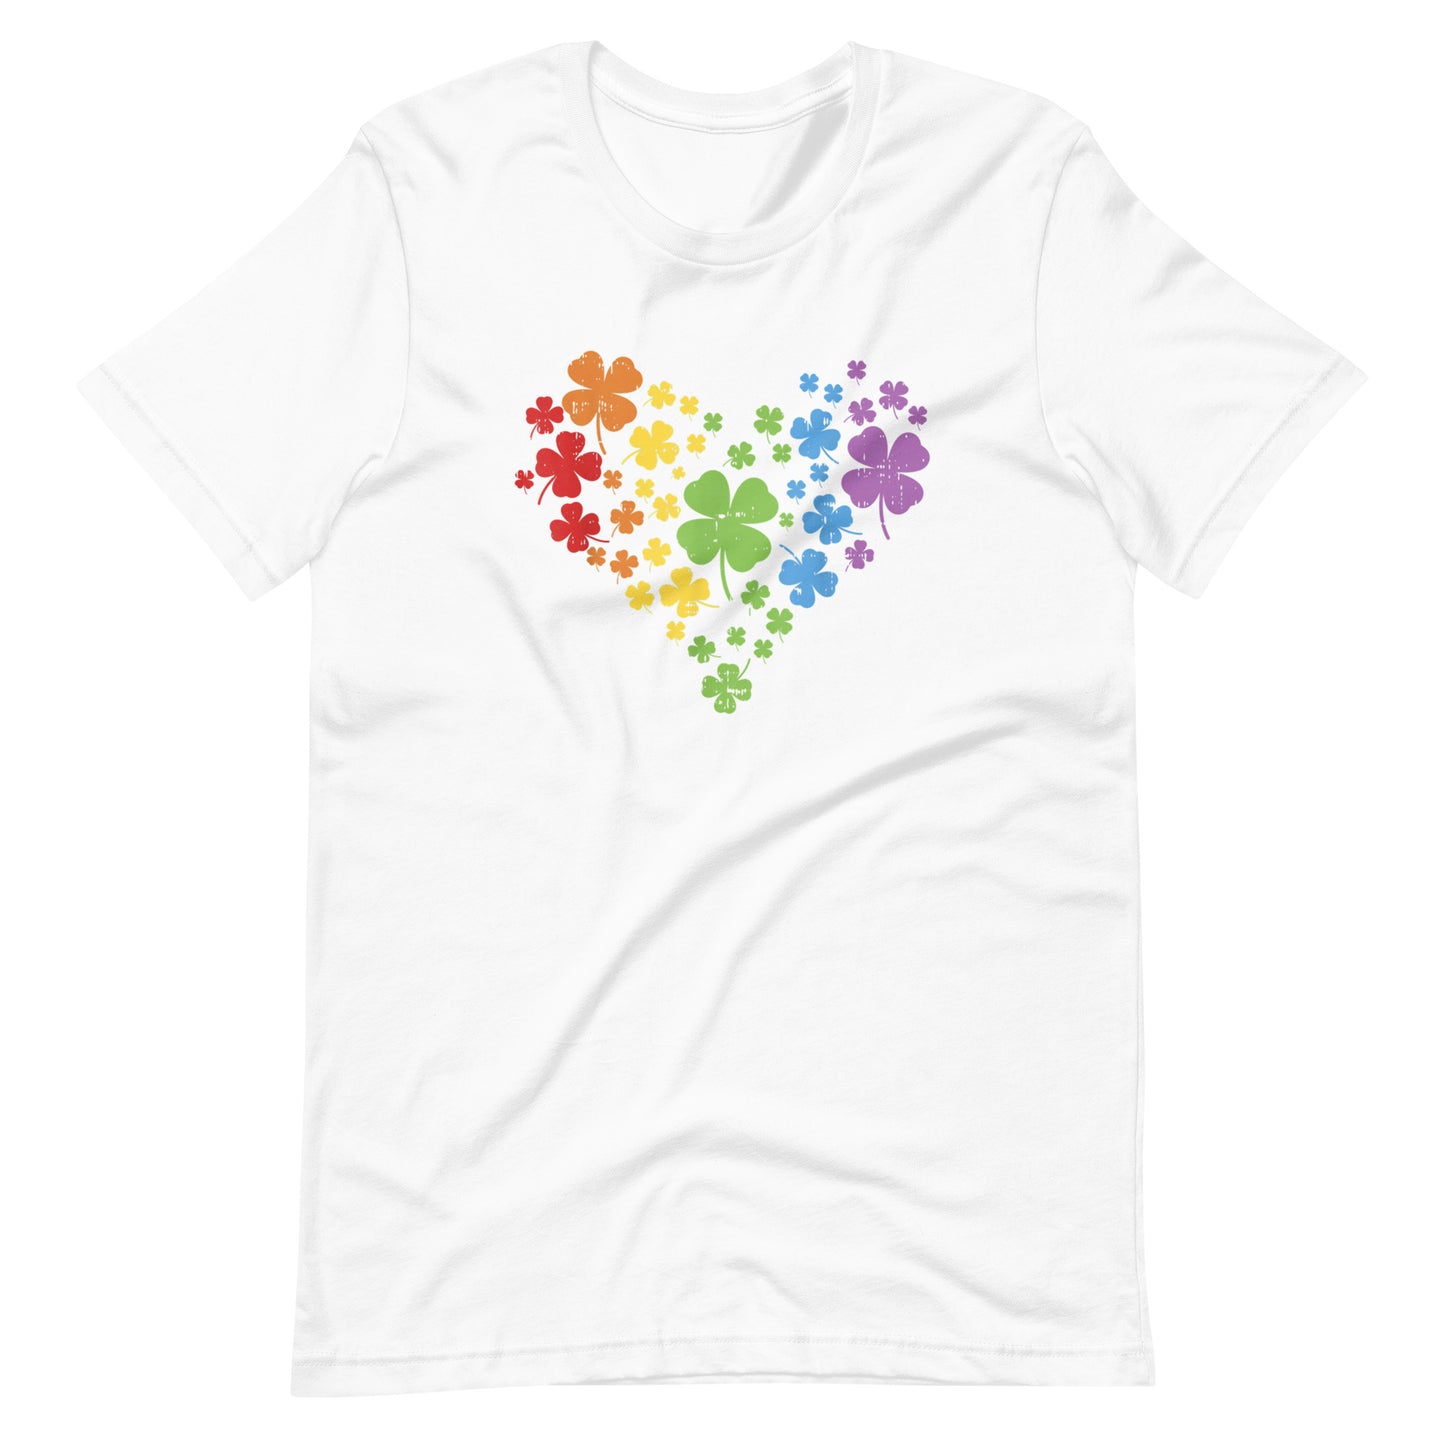 Bit of Love Gay Pride T-Shirt - gay pride apparel